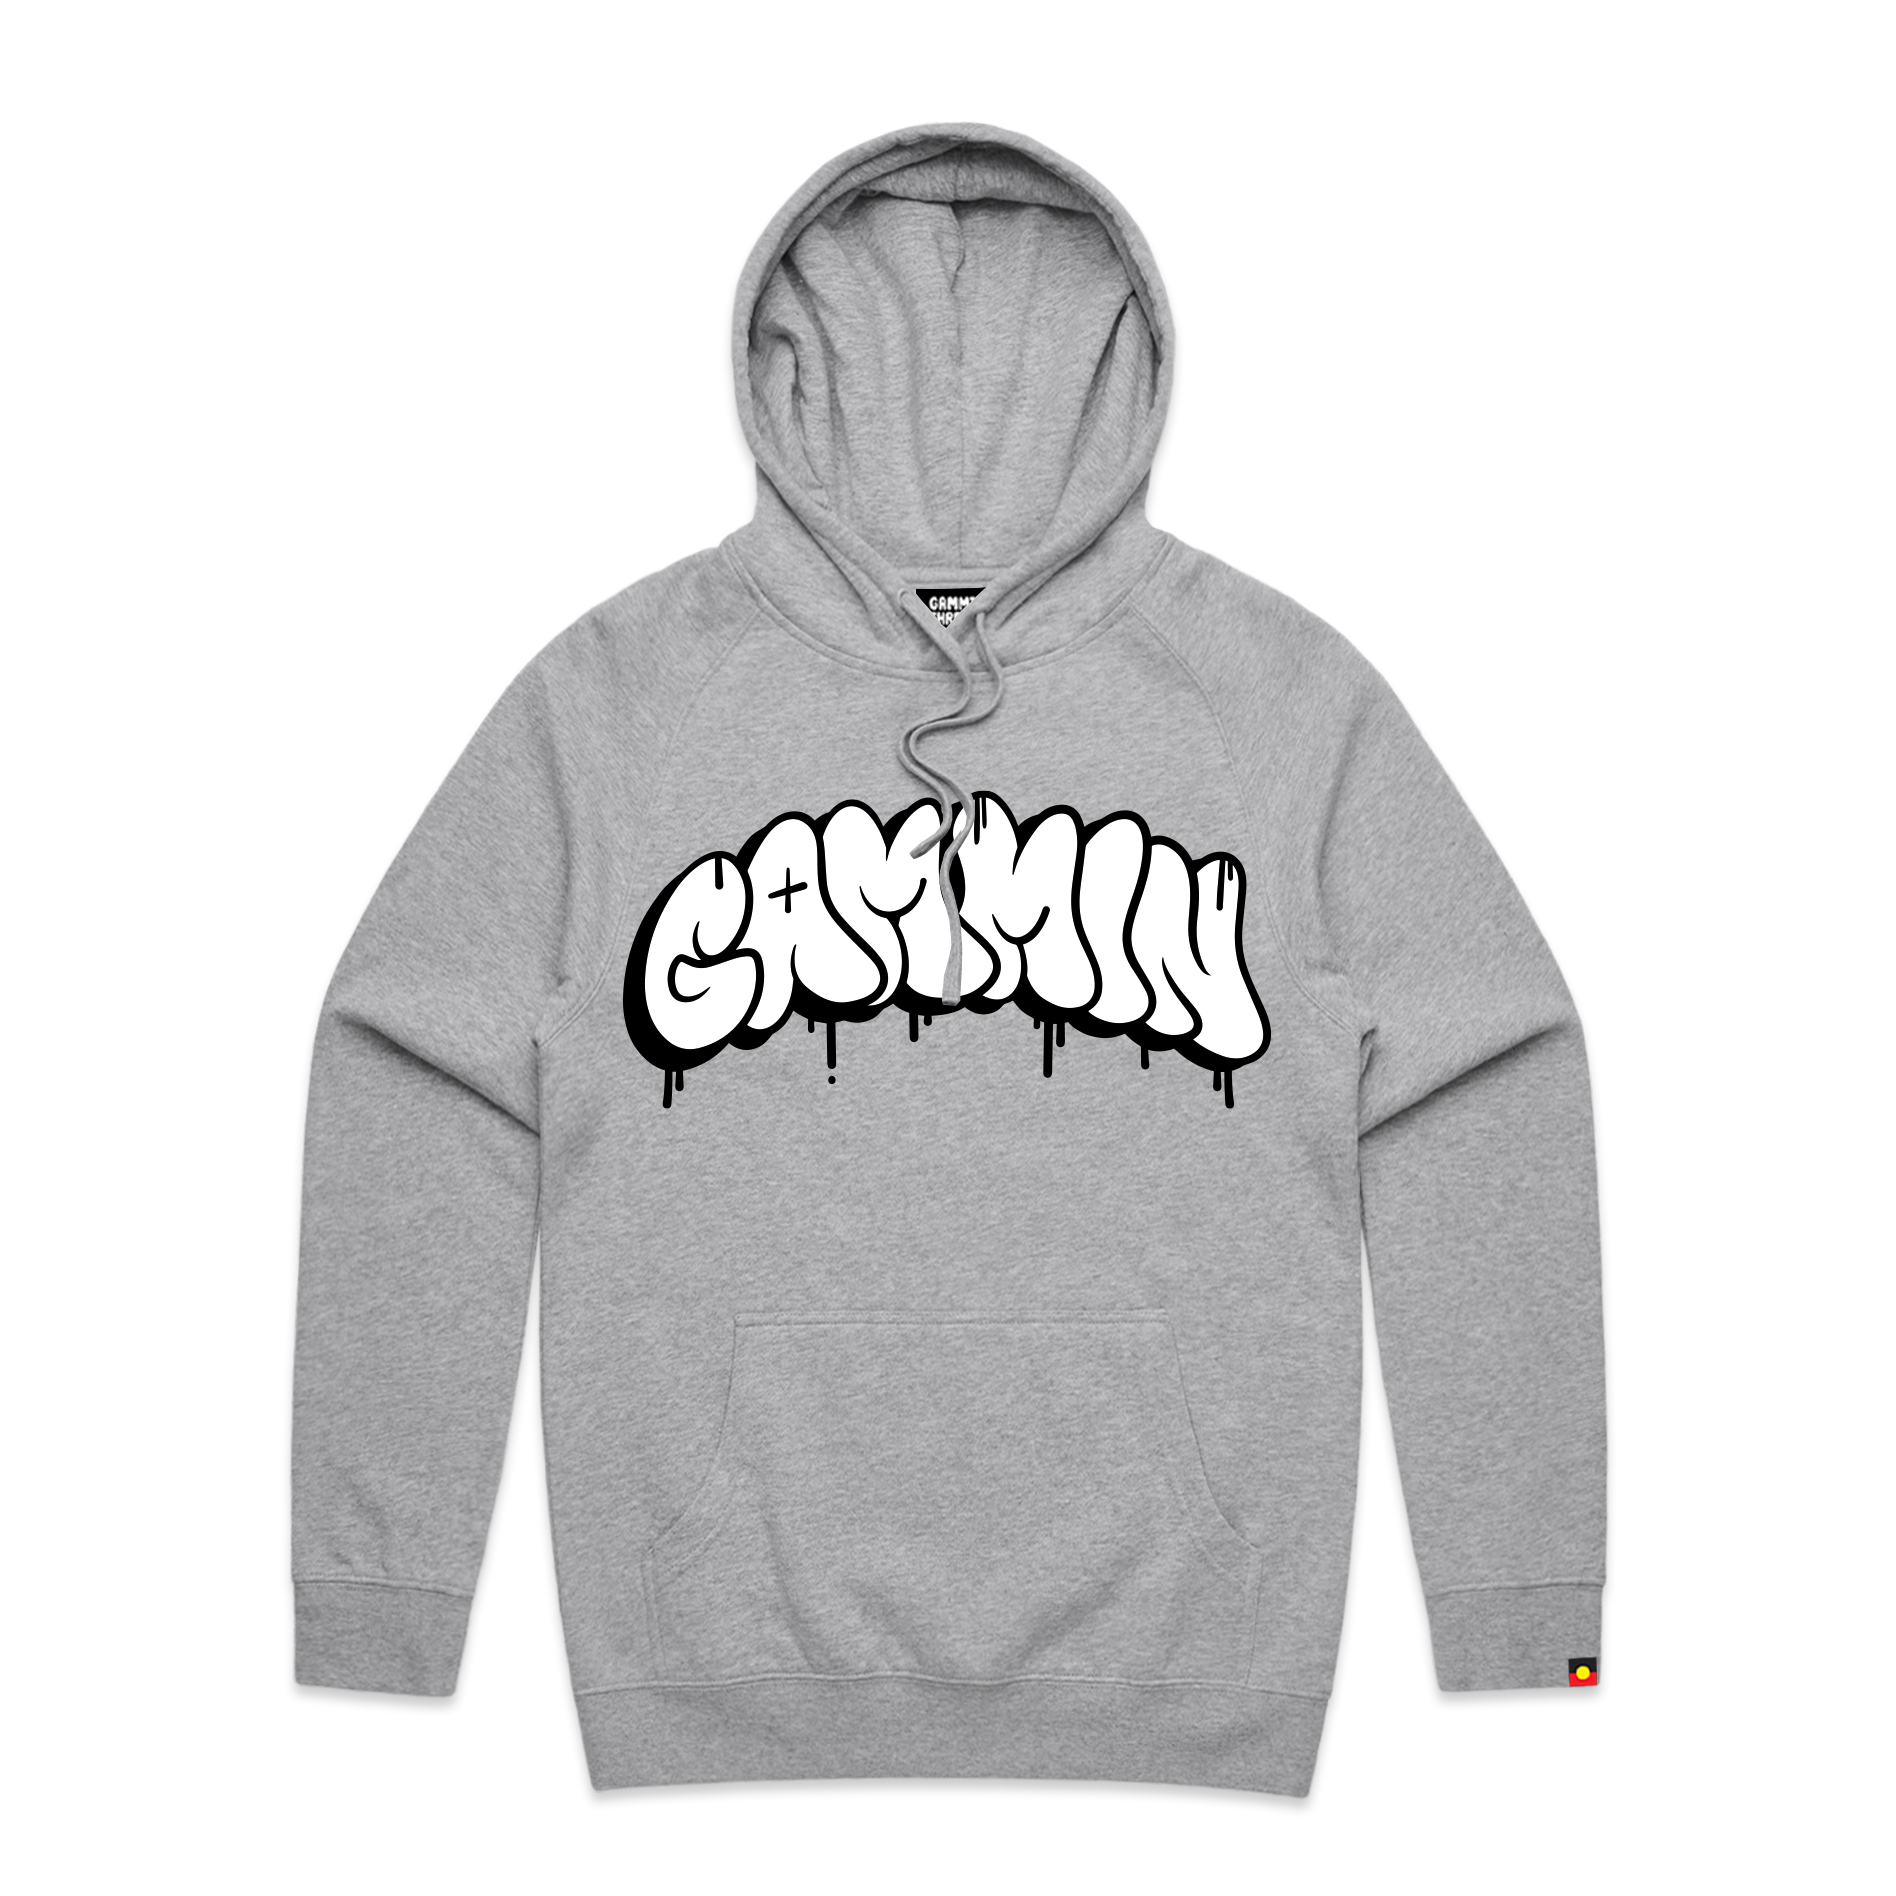 Gammin graffiti hoodie